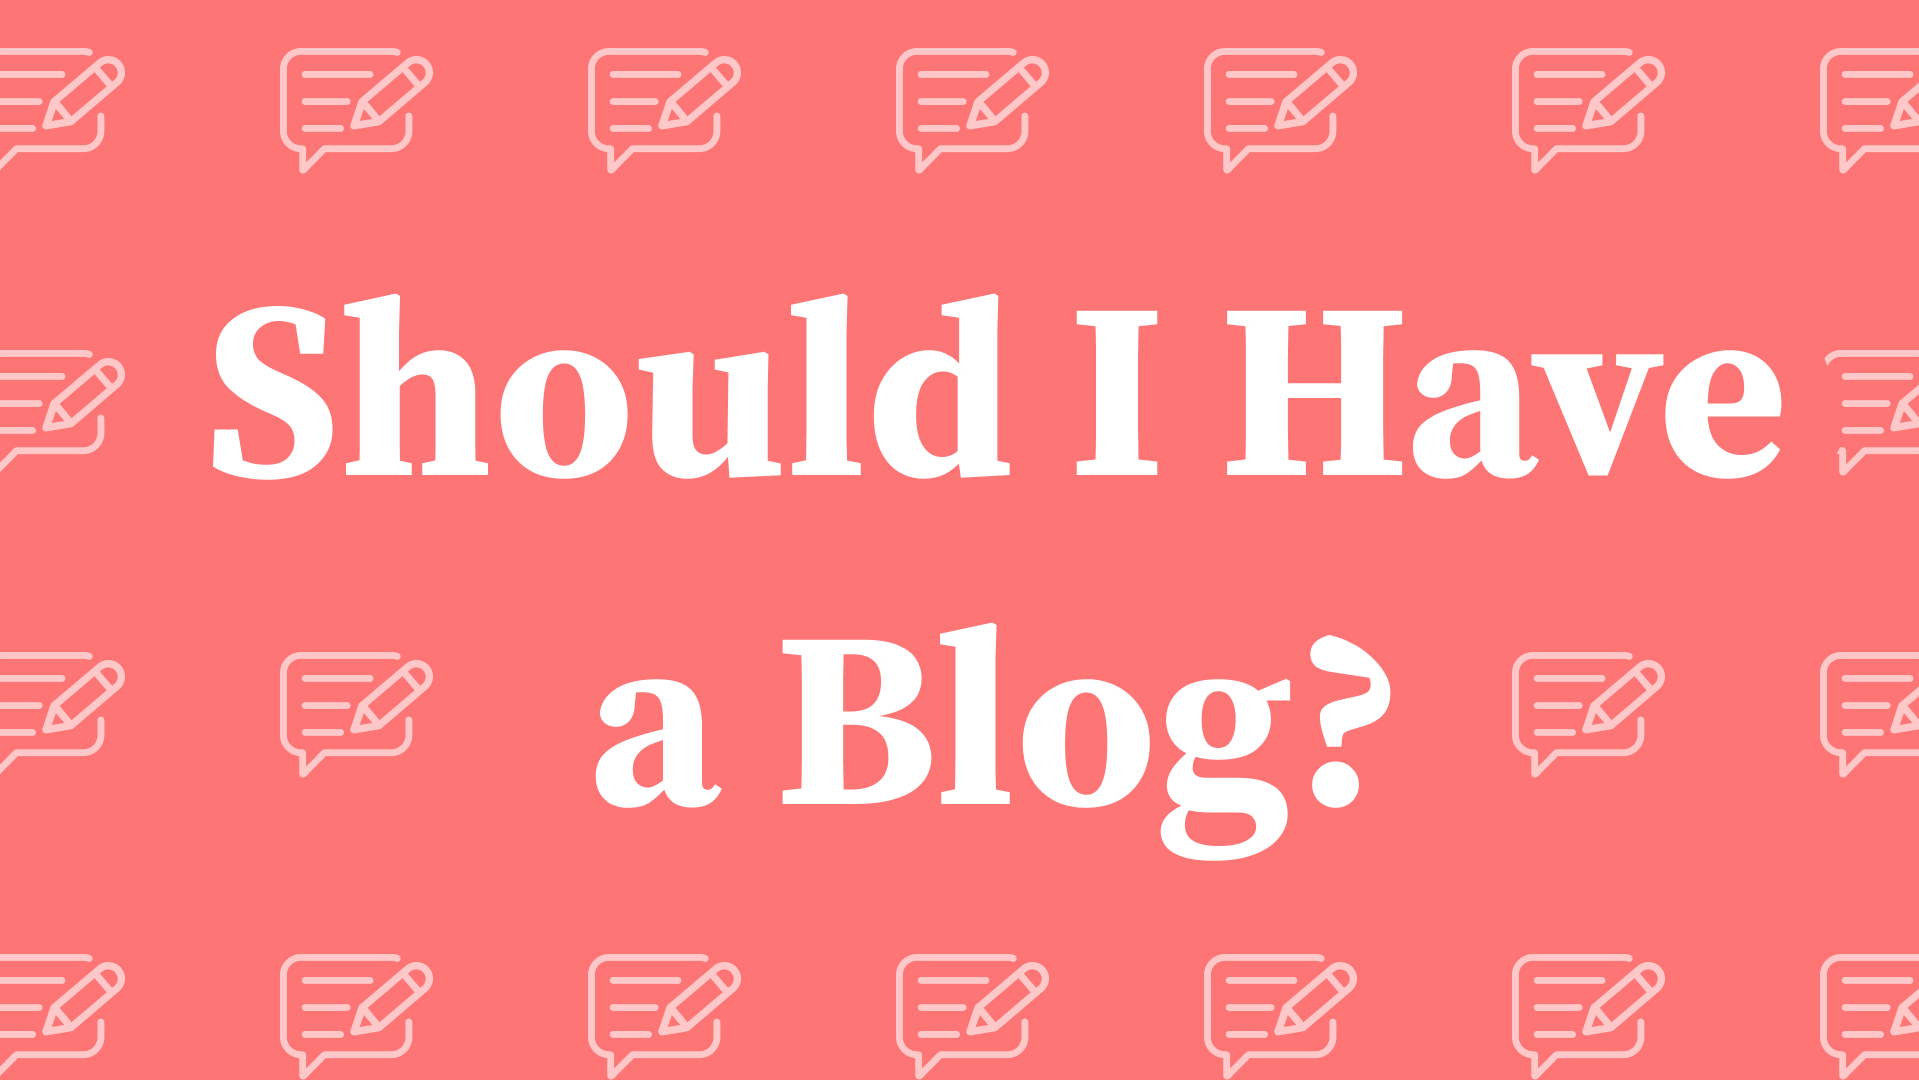 Should I Have a Blog?